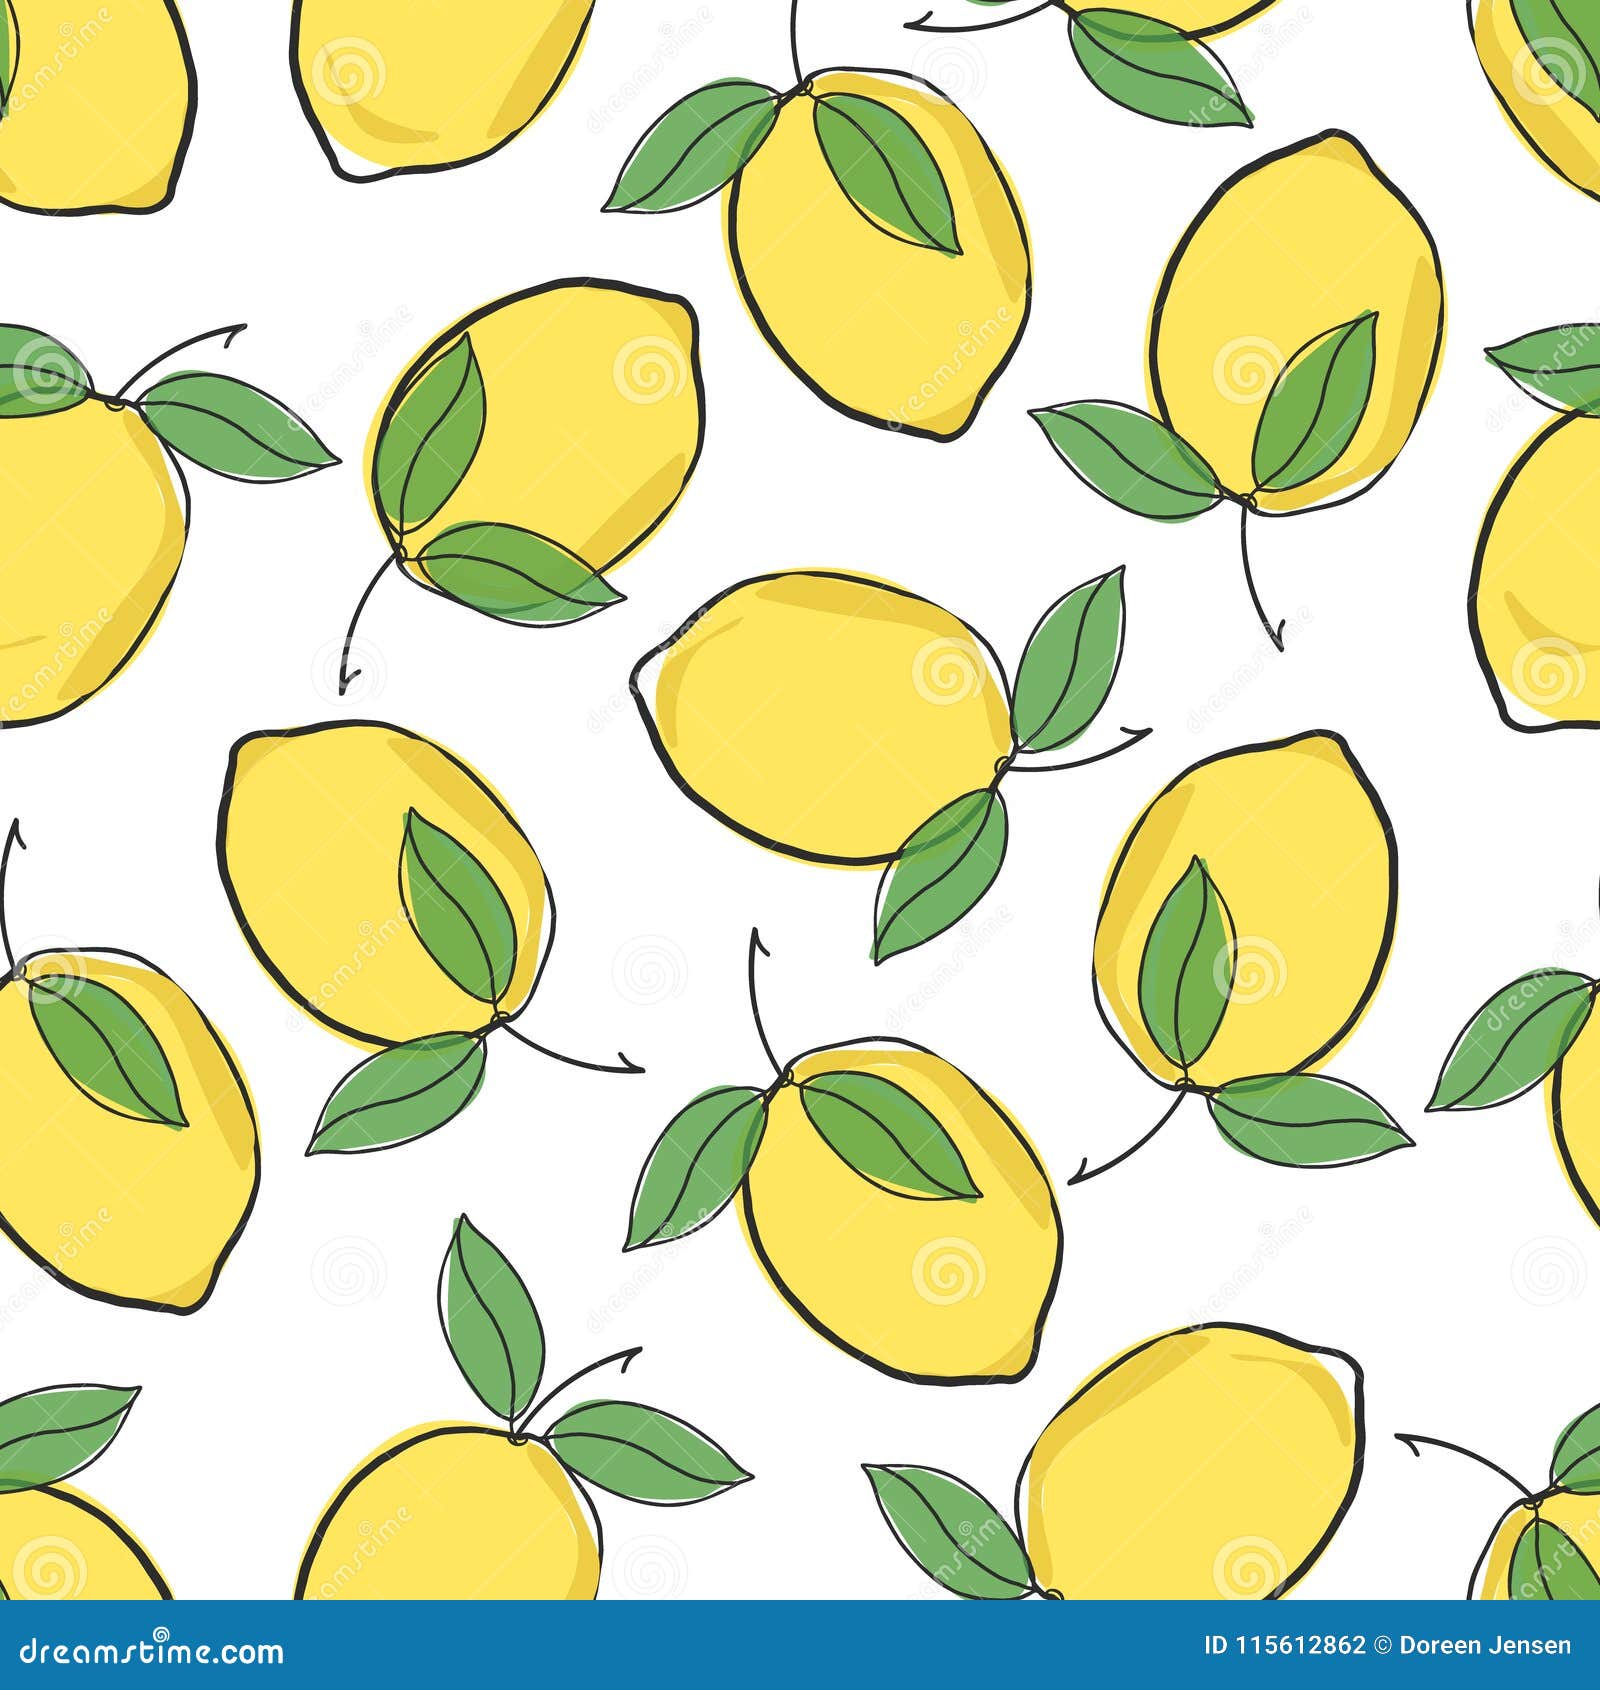 Cute Fresh Lemon Yellow Vector Repeat Seamless Pattern on a White ...